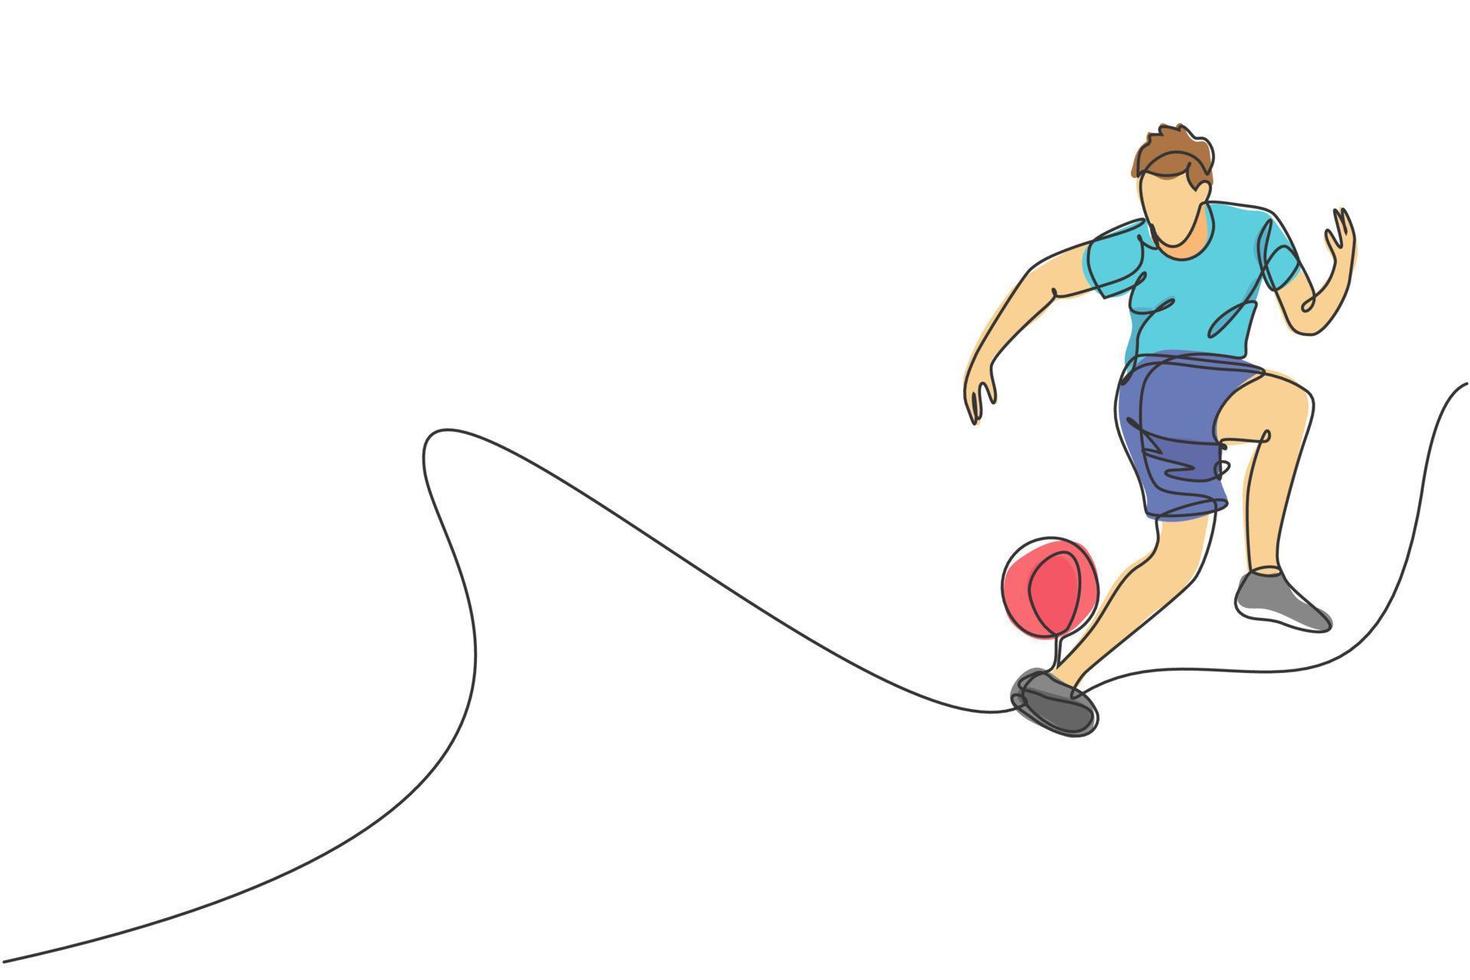 en enda linjeteckning av ung man utför fotboll freestyle, hoppa jonglering boll med häl på stadens torg vektorillustration. fotboll freestyler sport koncept. modern kontinuerlig linjeritningsdesign vektor